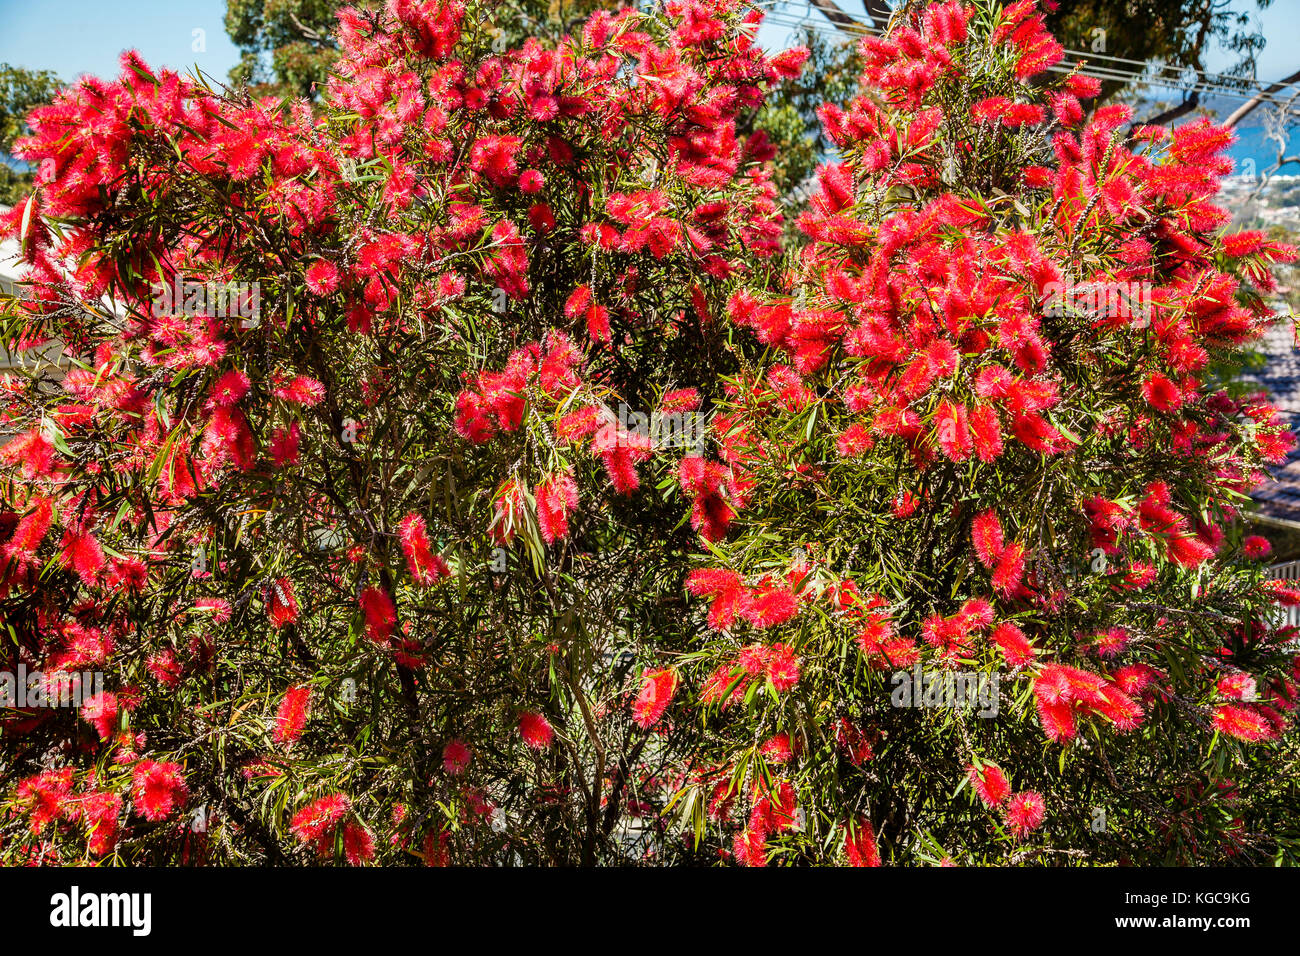 Australia, New South Wales, Central Coast, Red bottlebrush in full flower at Umina Beach Stock Photo